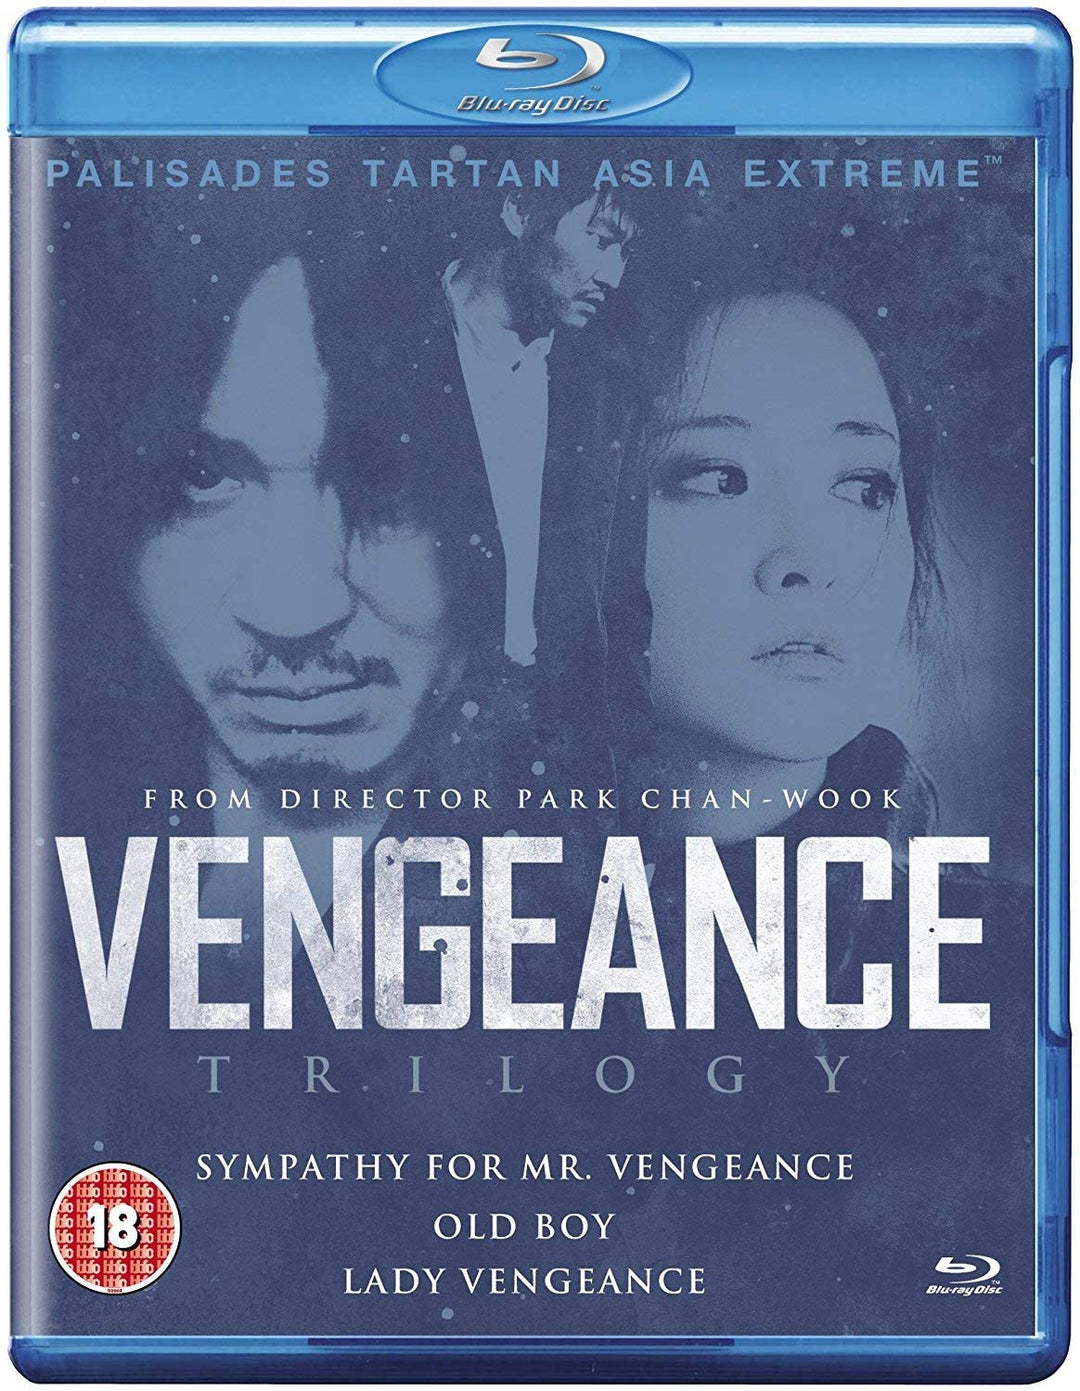 Vengeance Trilogy - Drama [DVD]